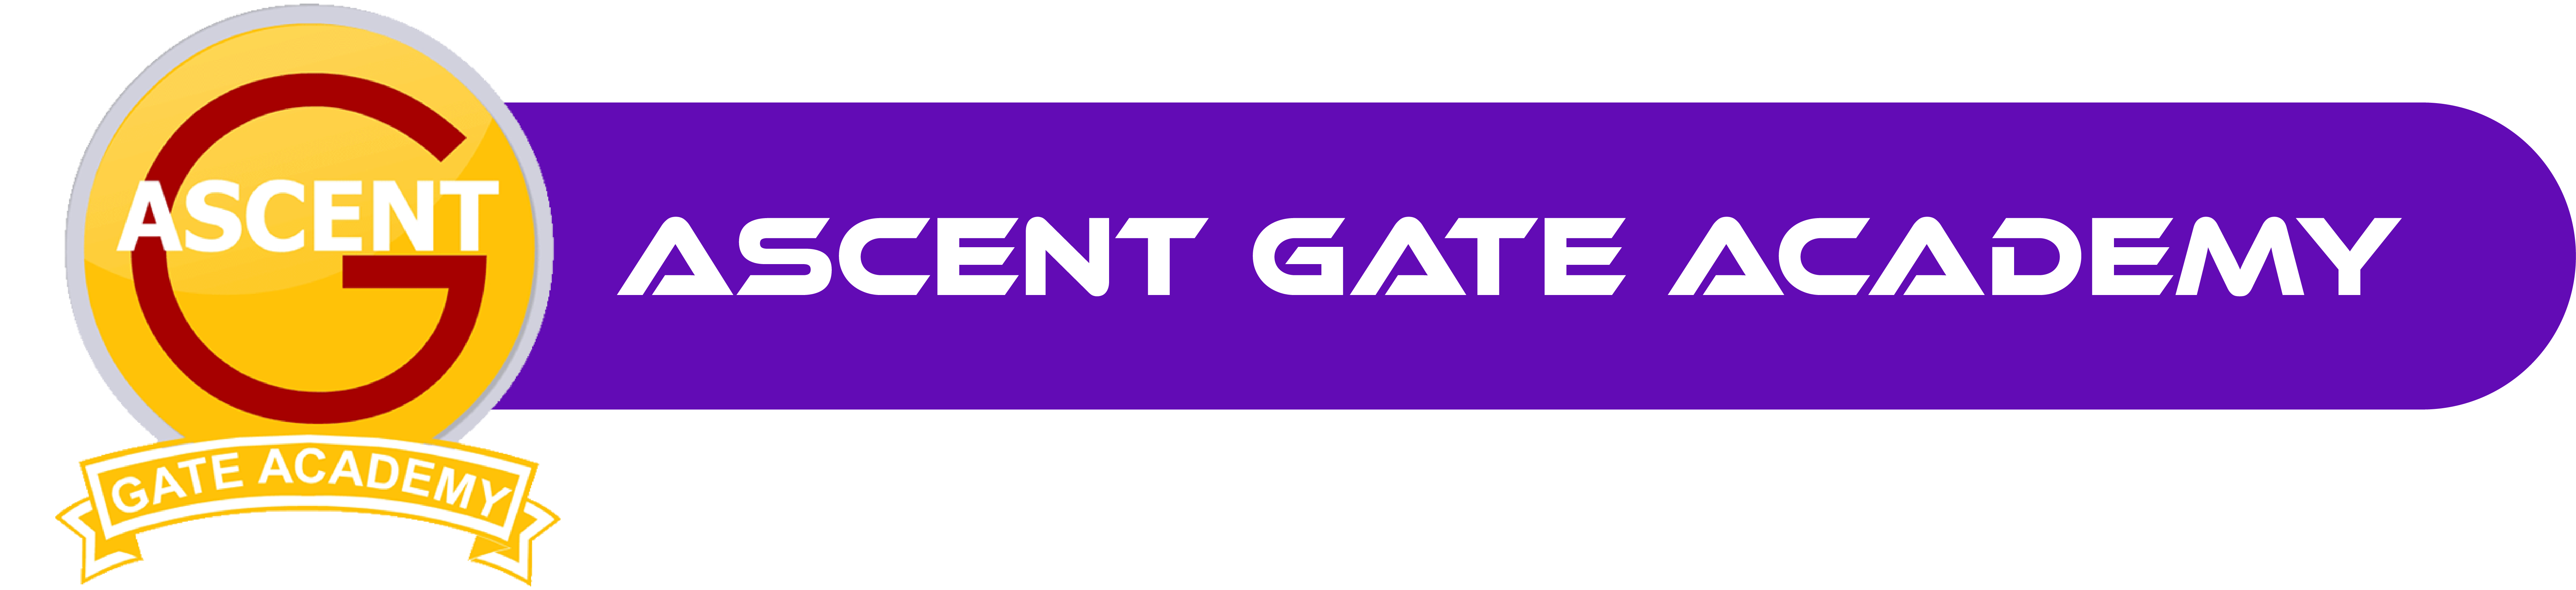 Ascent GATE Academy